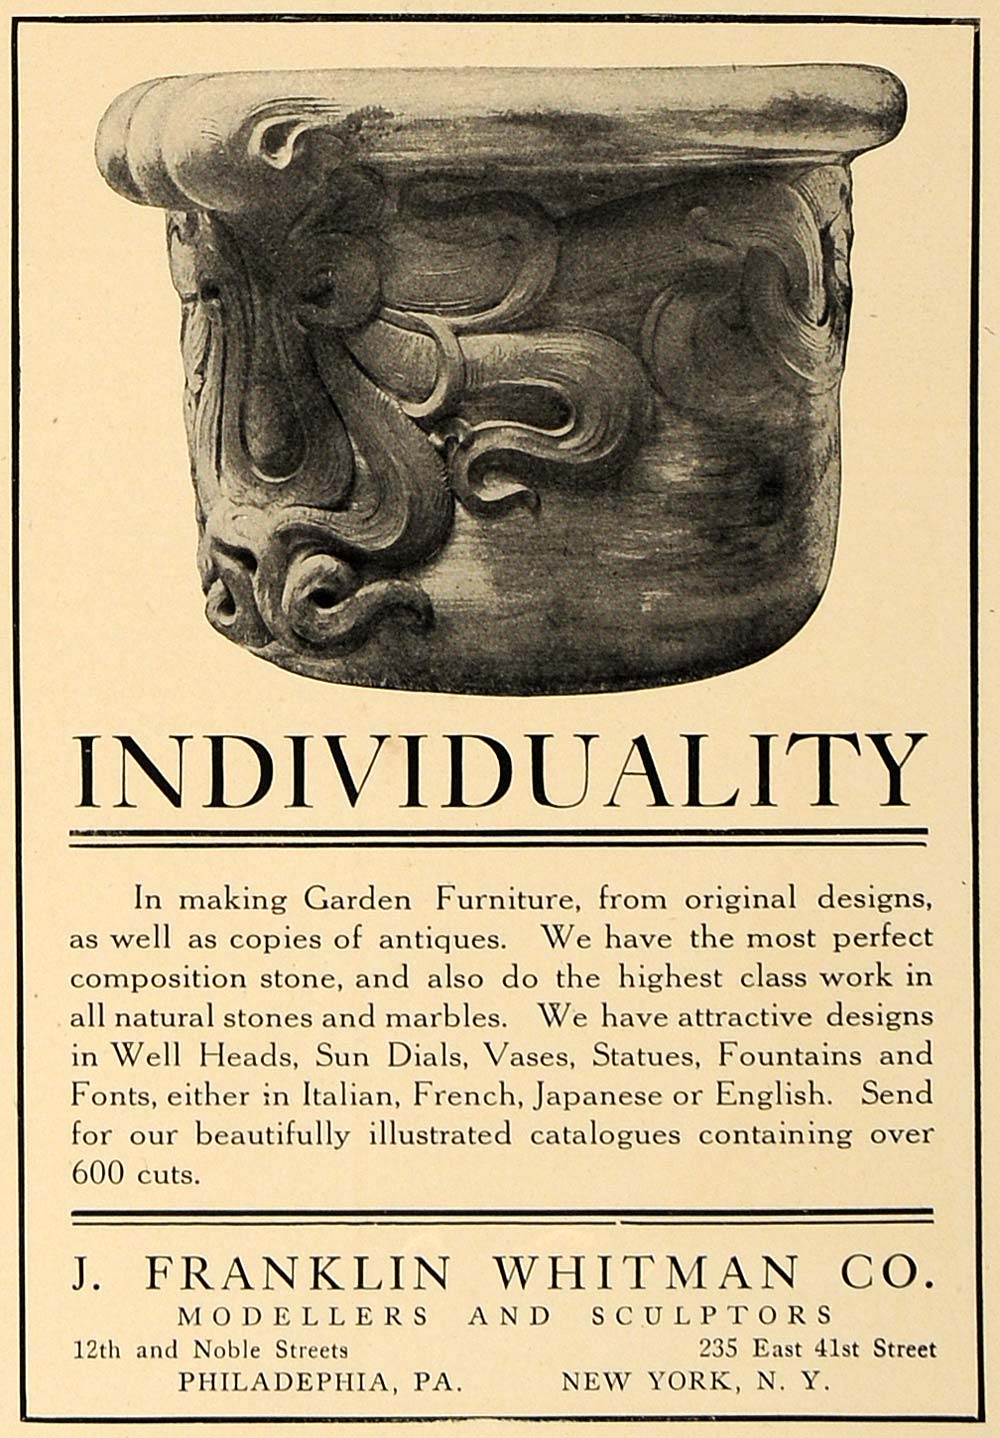 1907 Ad J. Franklin Whitman Garden Furniture Pot Design - ORIGINAL CL4